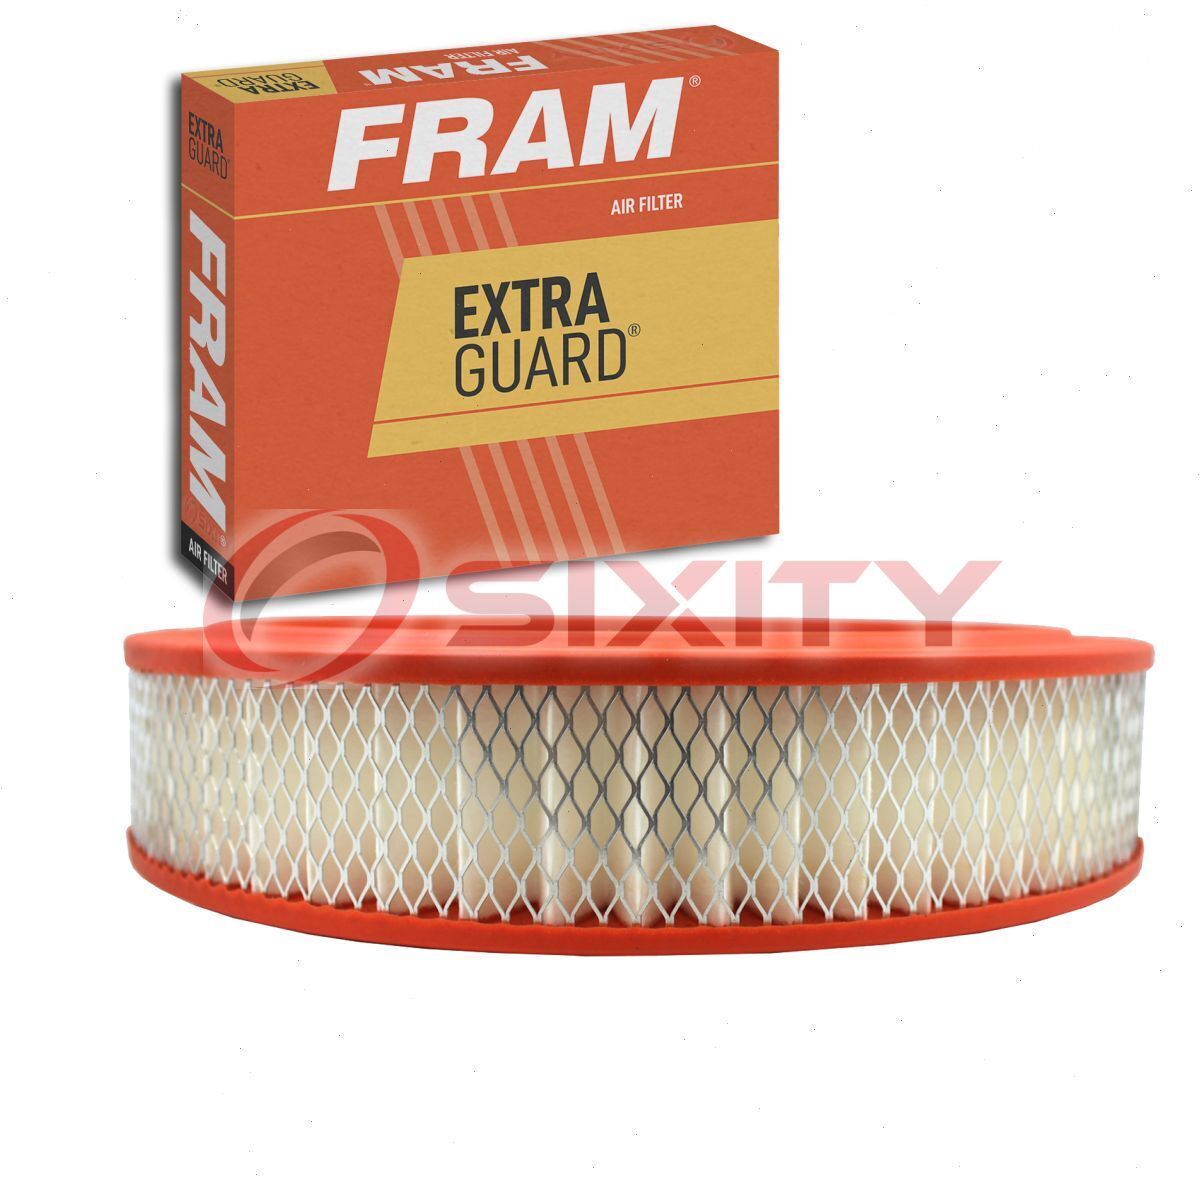 FRAM Extra Guard Air Filter for 1975-1980 Ford Granada Intake Inlet Manifold ym